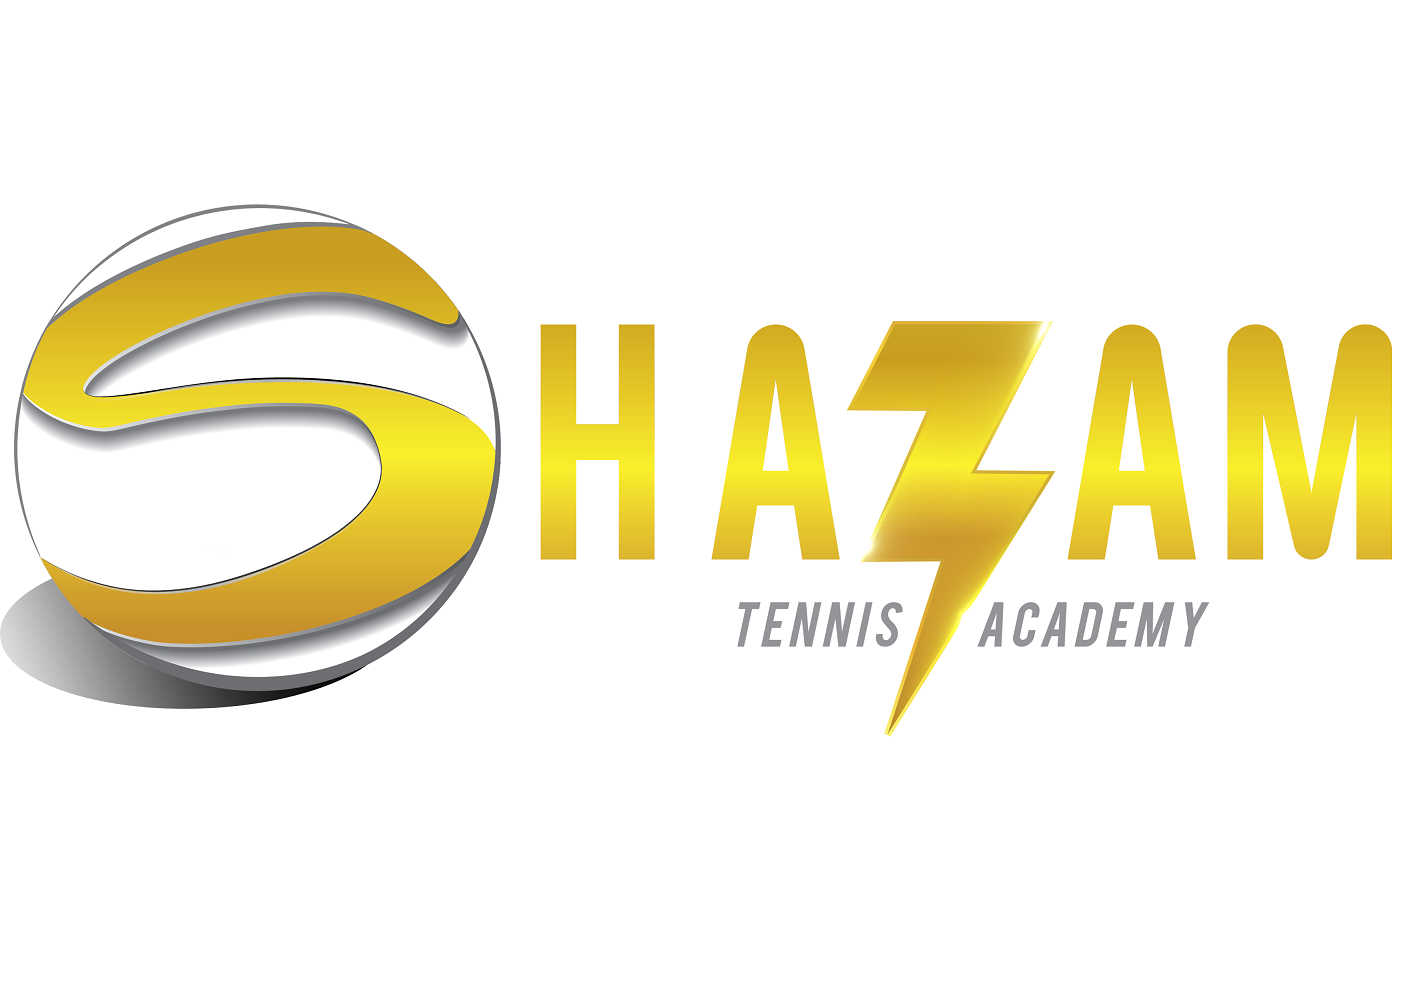 Shazam Tennis Academy